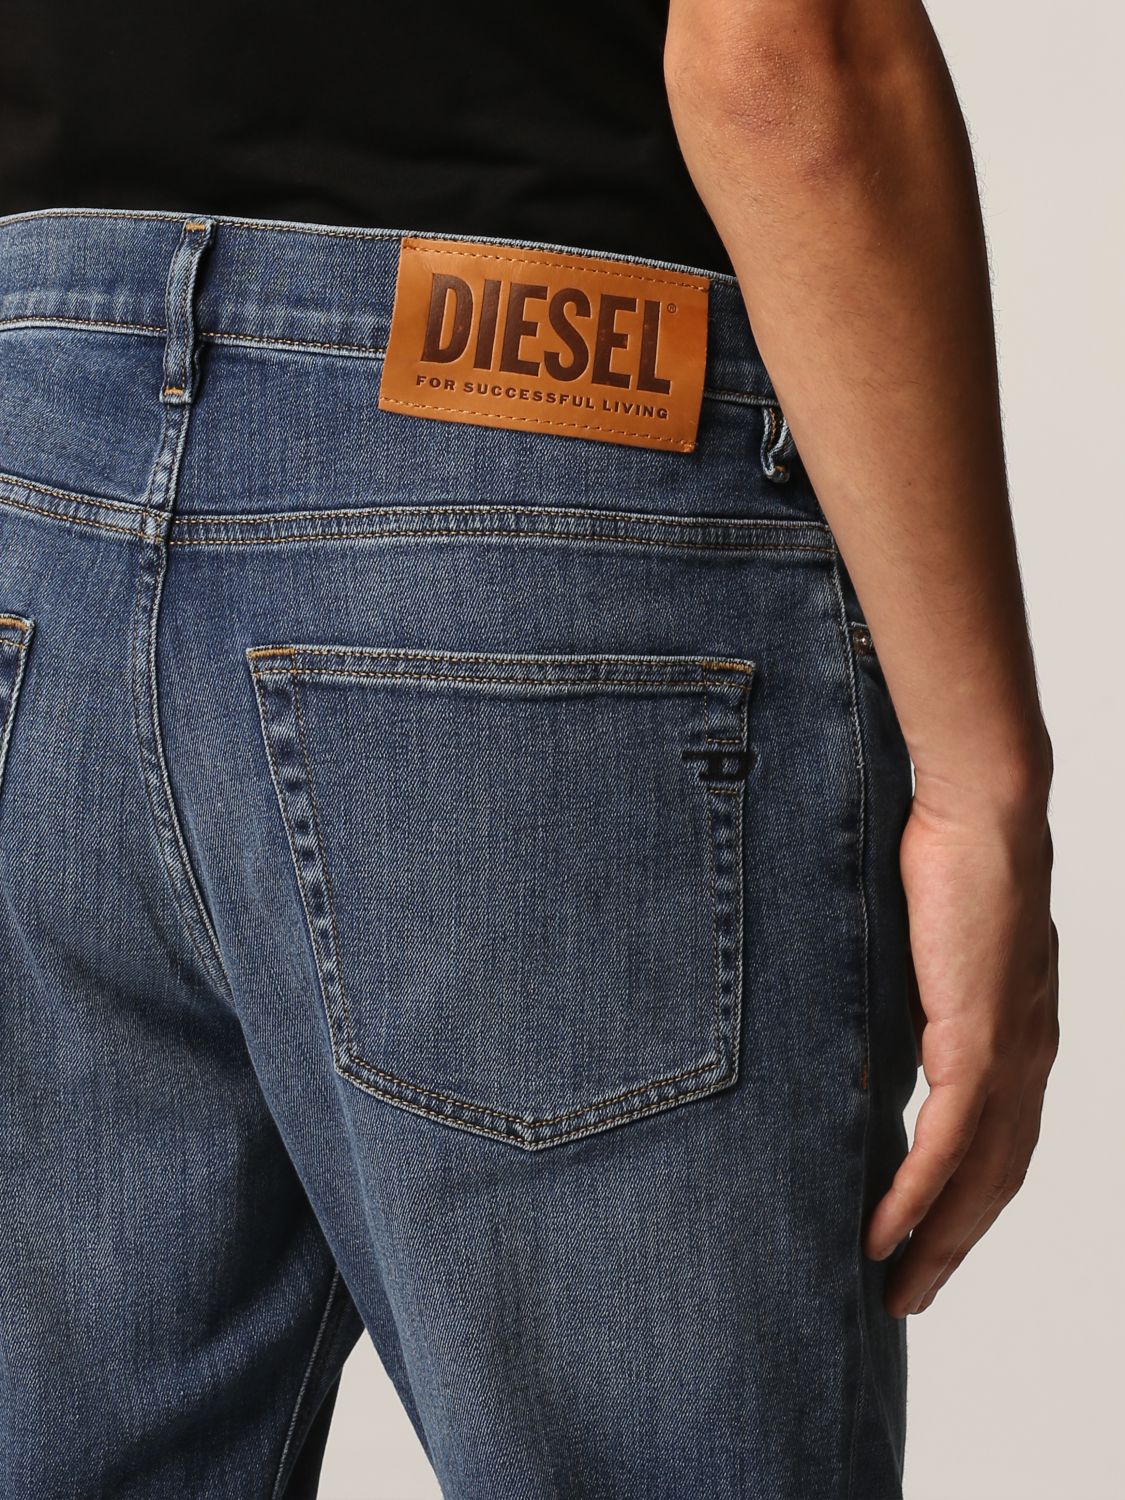 DIESEL: D-finig regular fit jeans | Jeans Diesel Denim | Jeans Diesel A01695 09A80 GIGLIO.COM